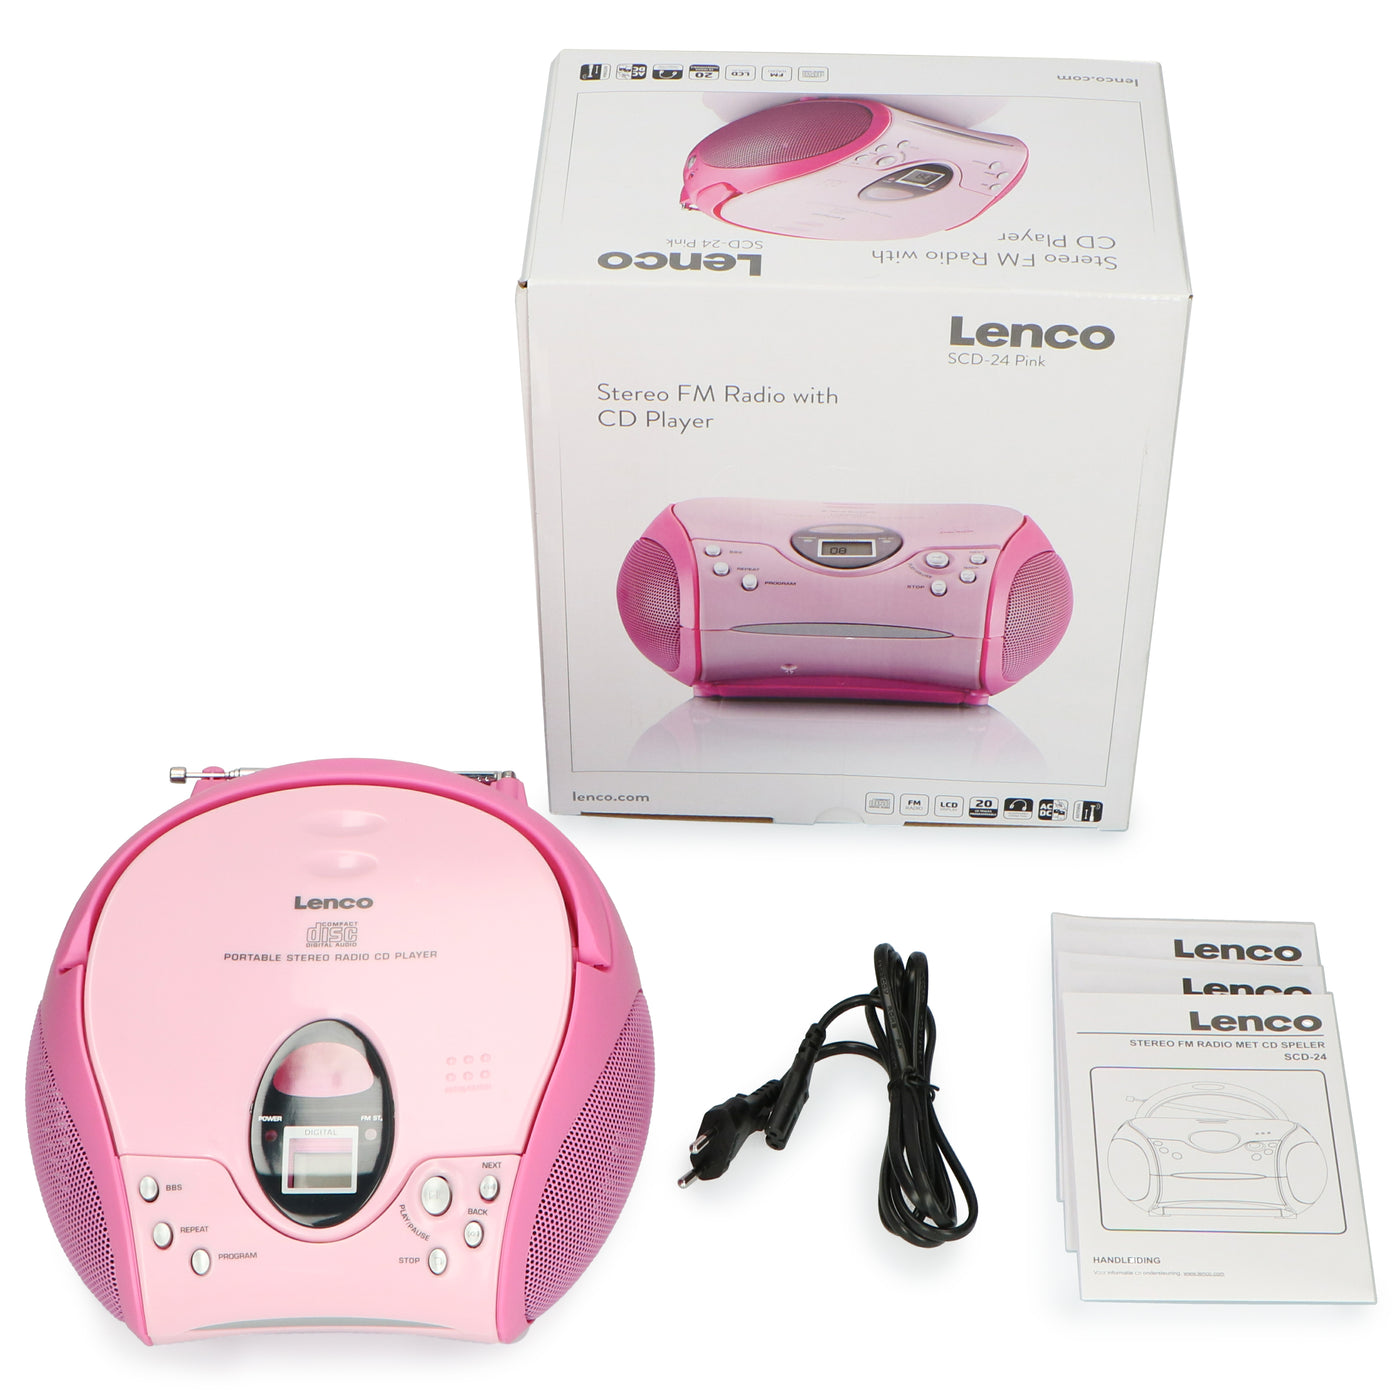 LENCO SCD-24 Pink CD radio Pink player stereo Lenco - - Portable -Catalog – with FM